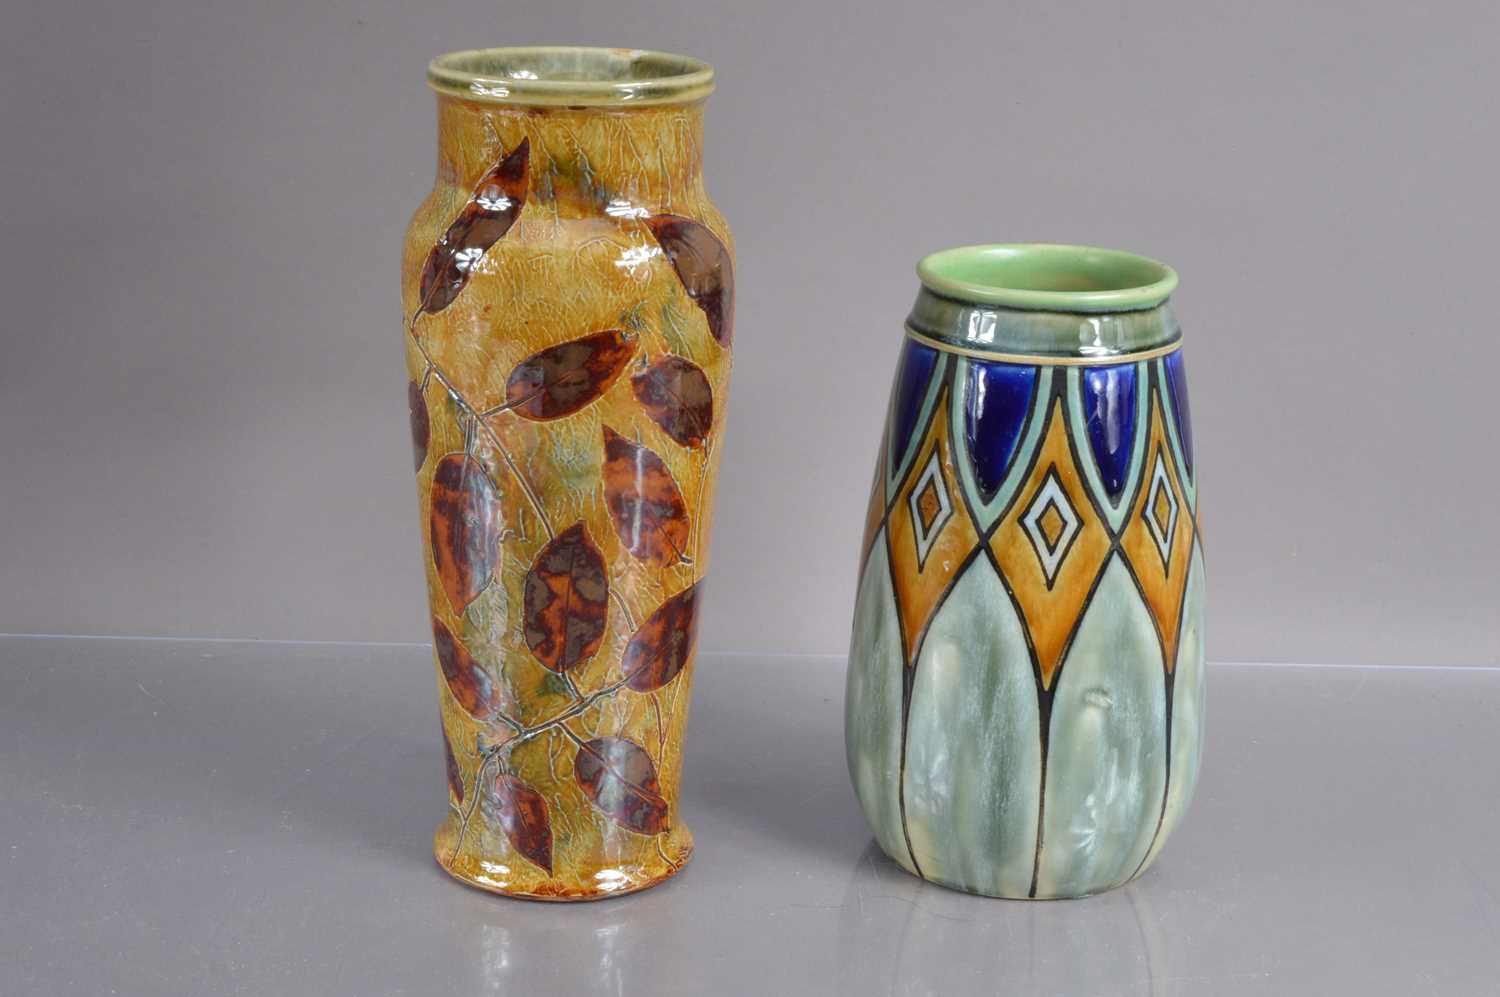 Two Royal Doulton Vases including an Art Nouveau "Autumn Leaves" stoneware vase circa 1920s,